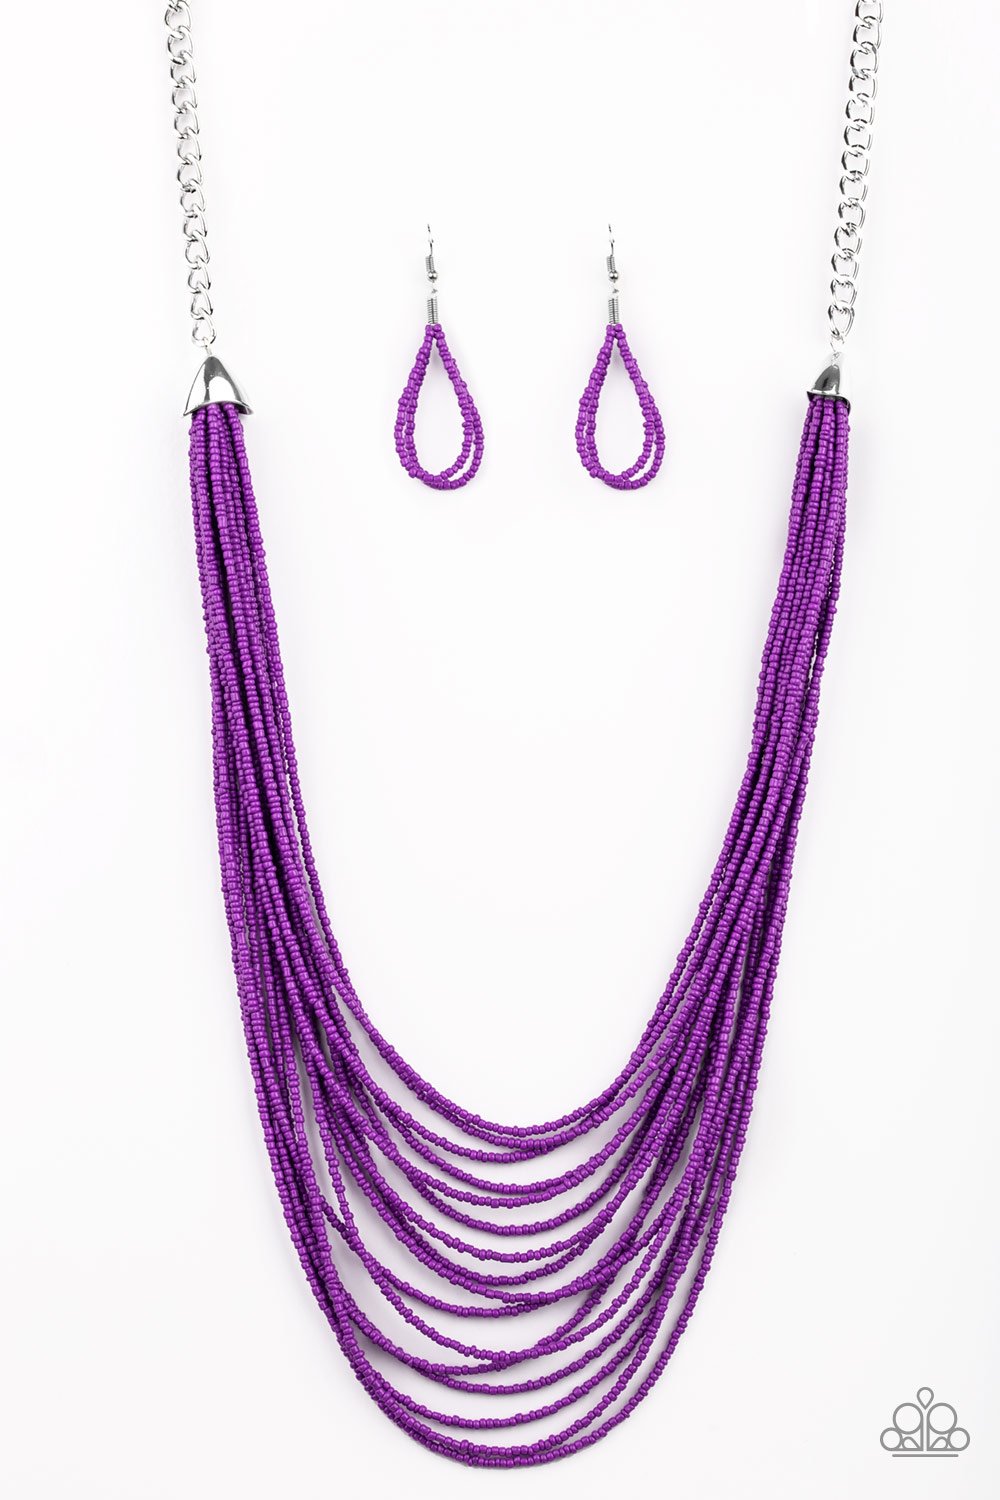 Peacefully Pacific Purple

Necklace - Daria's Blings N Things